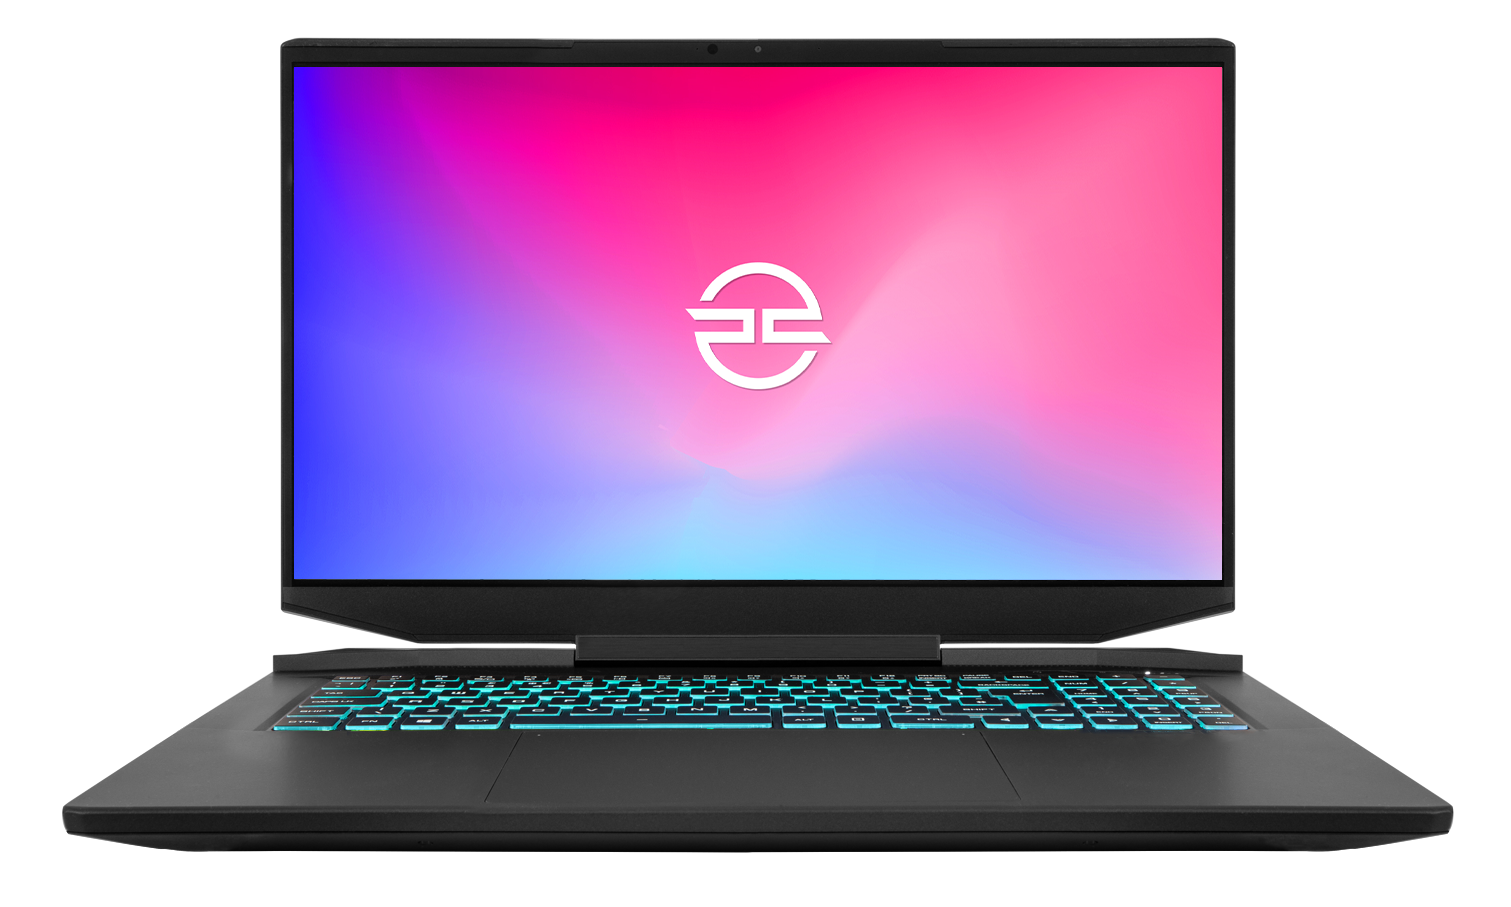 Recensione del portatile HP Envy 17: GeForce La GPU lavora sull'elegante  display 4K del portatile multimediale 